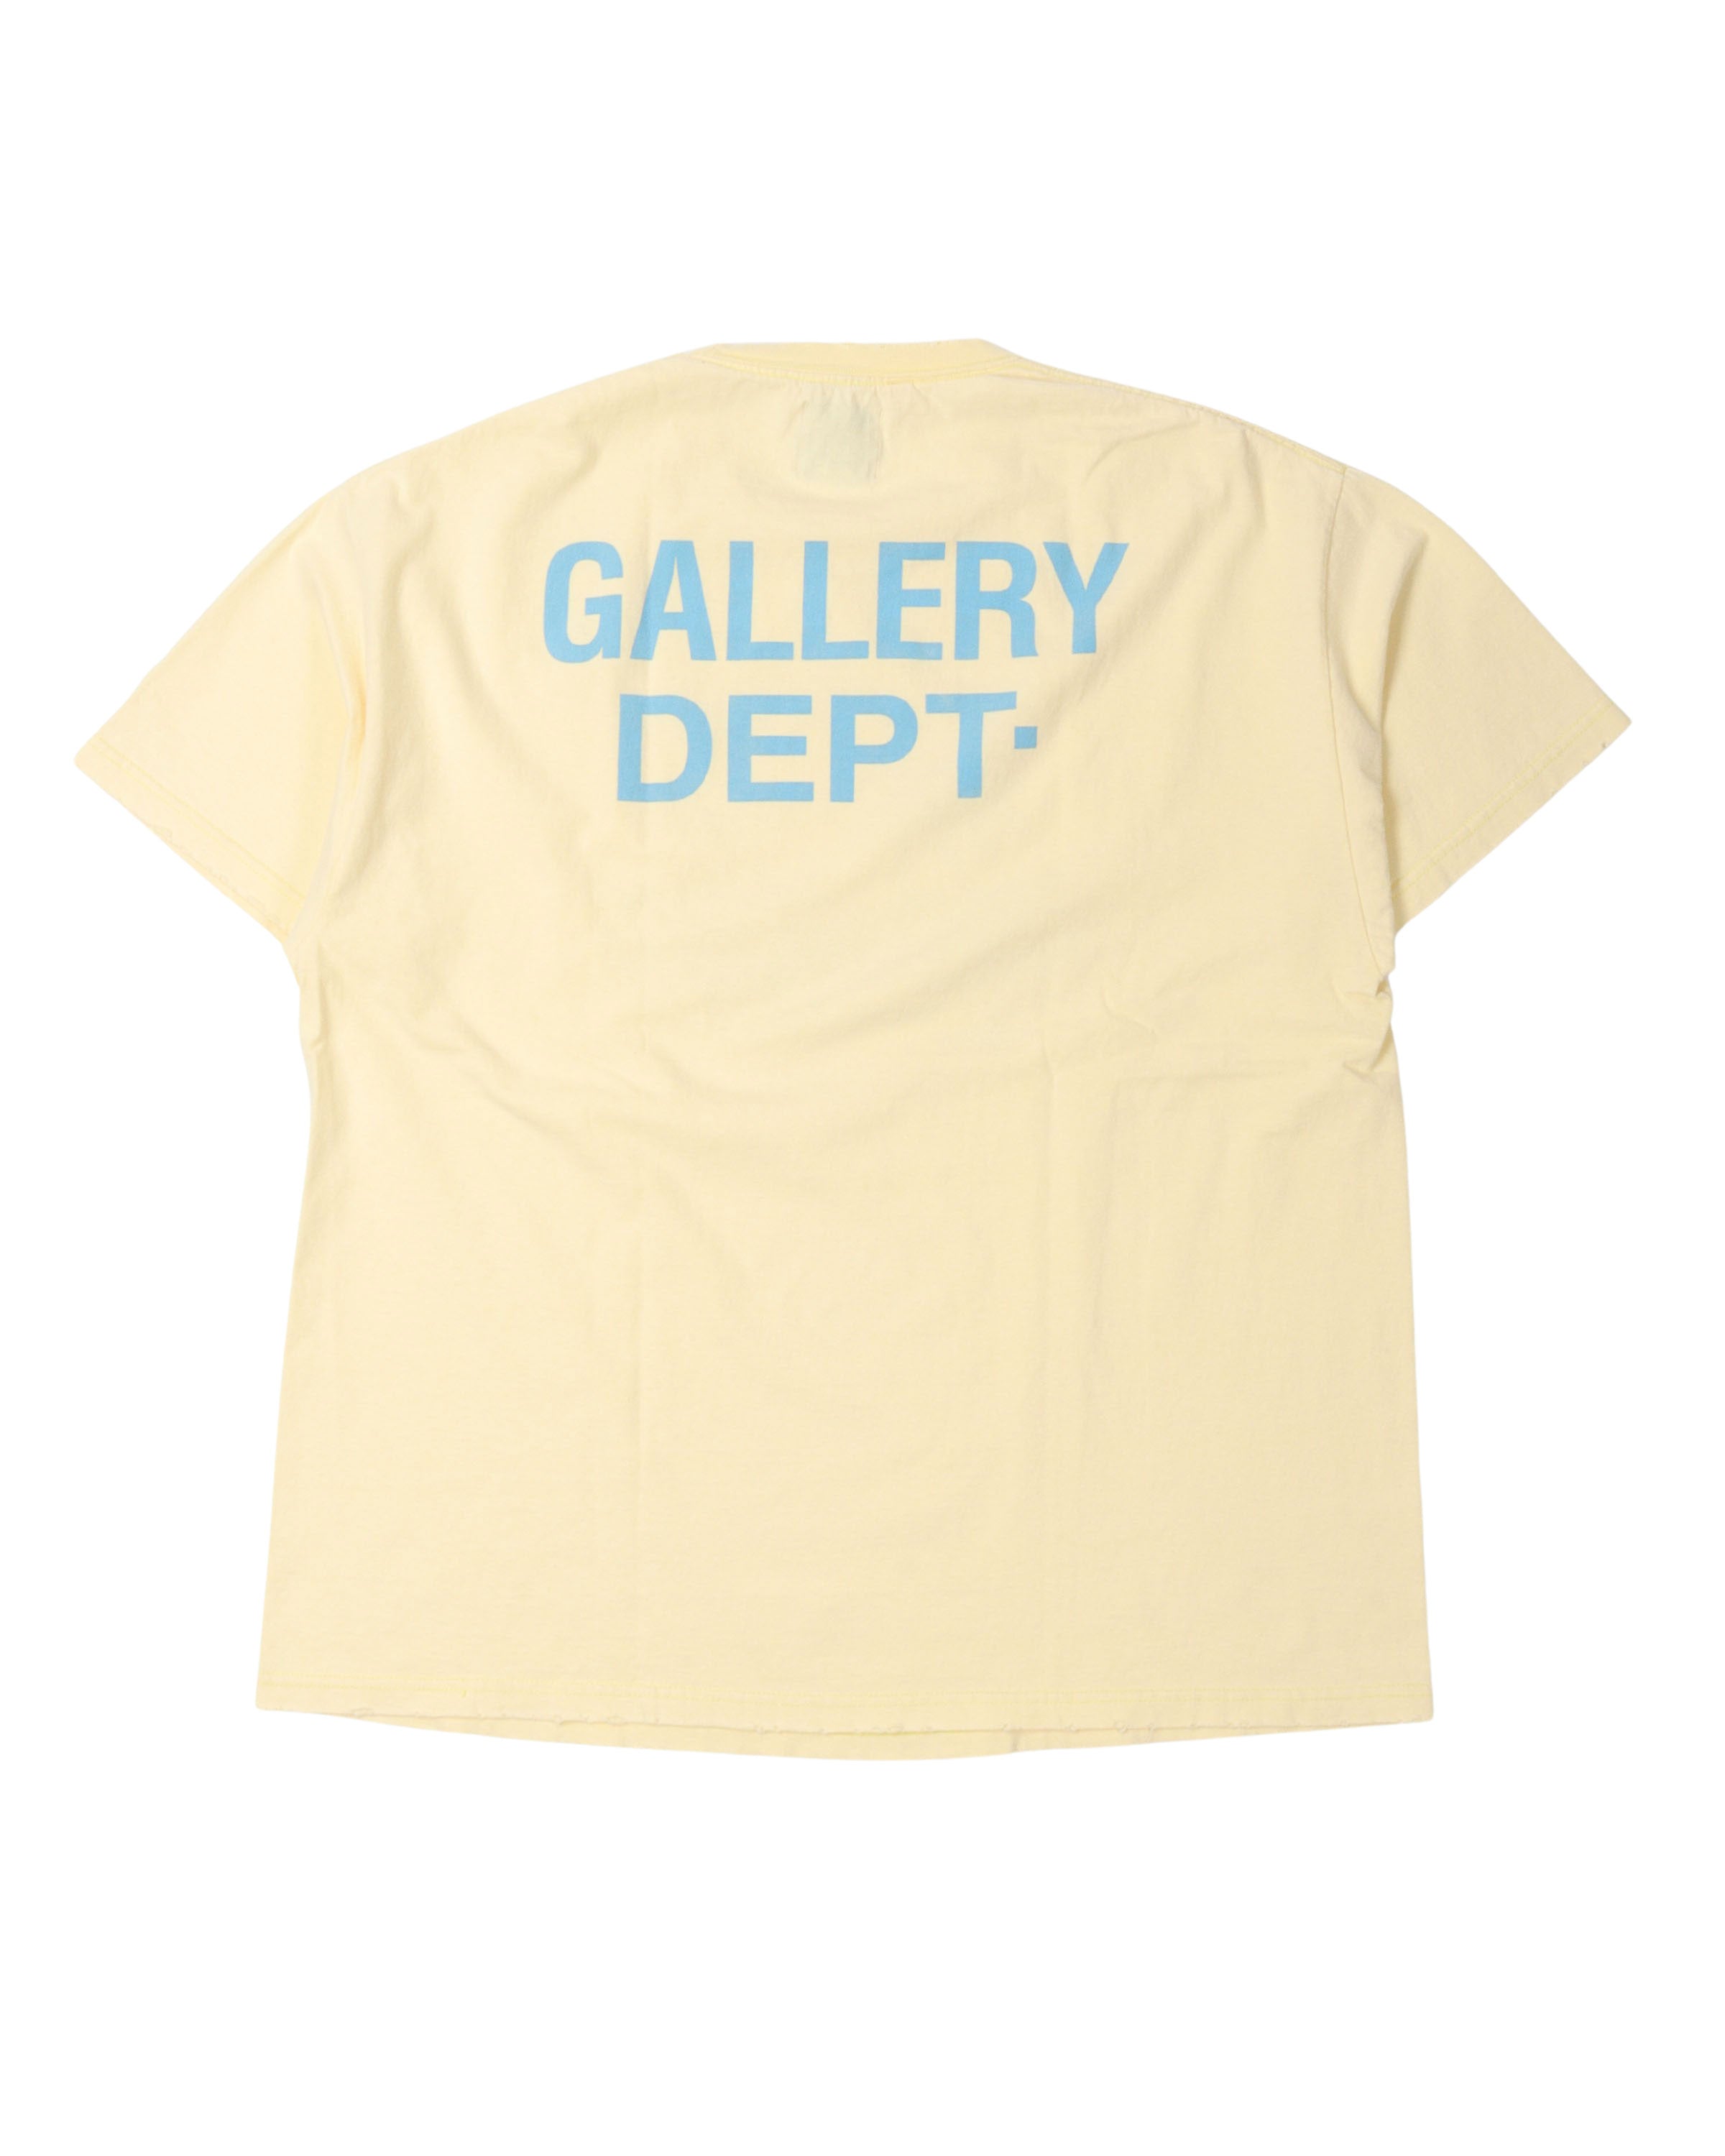 "Palm Springs" T-Shirt